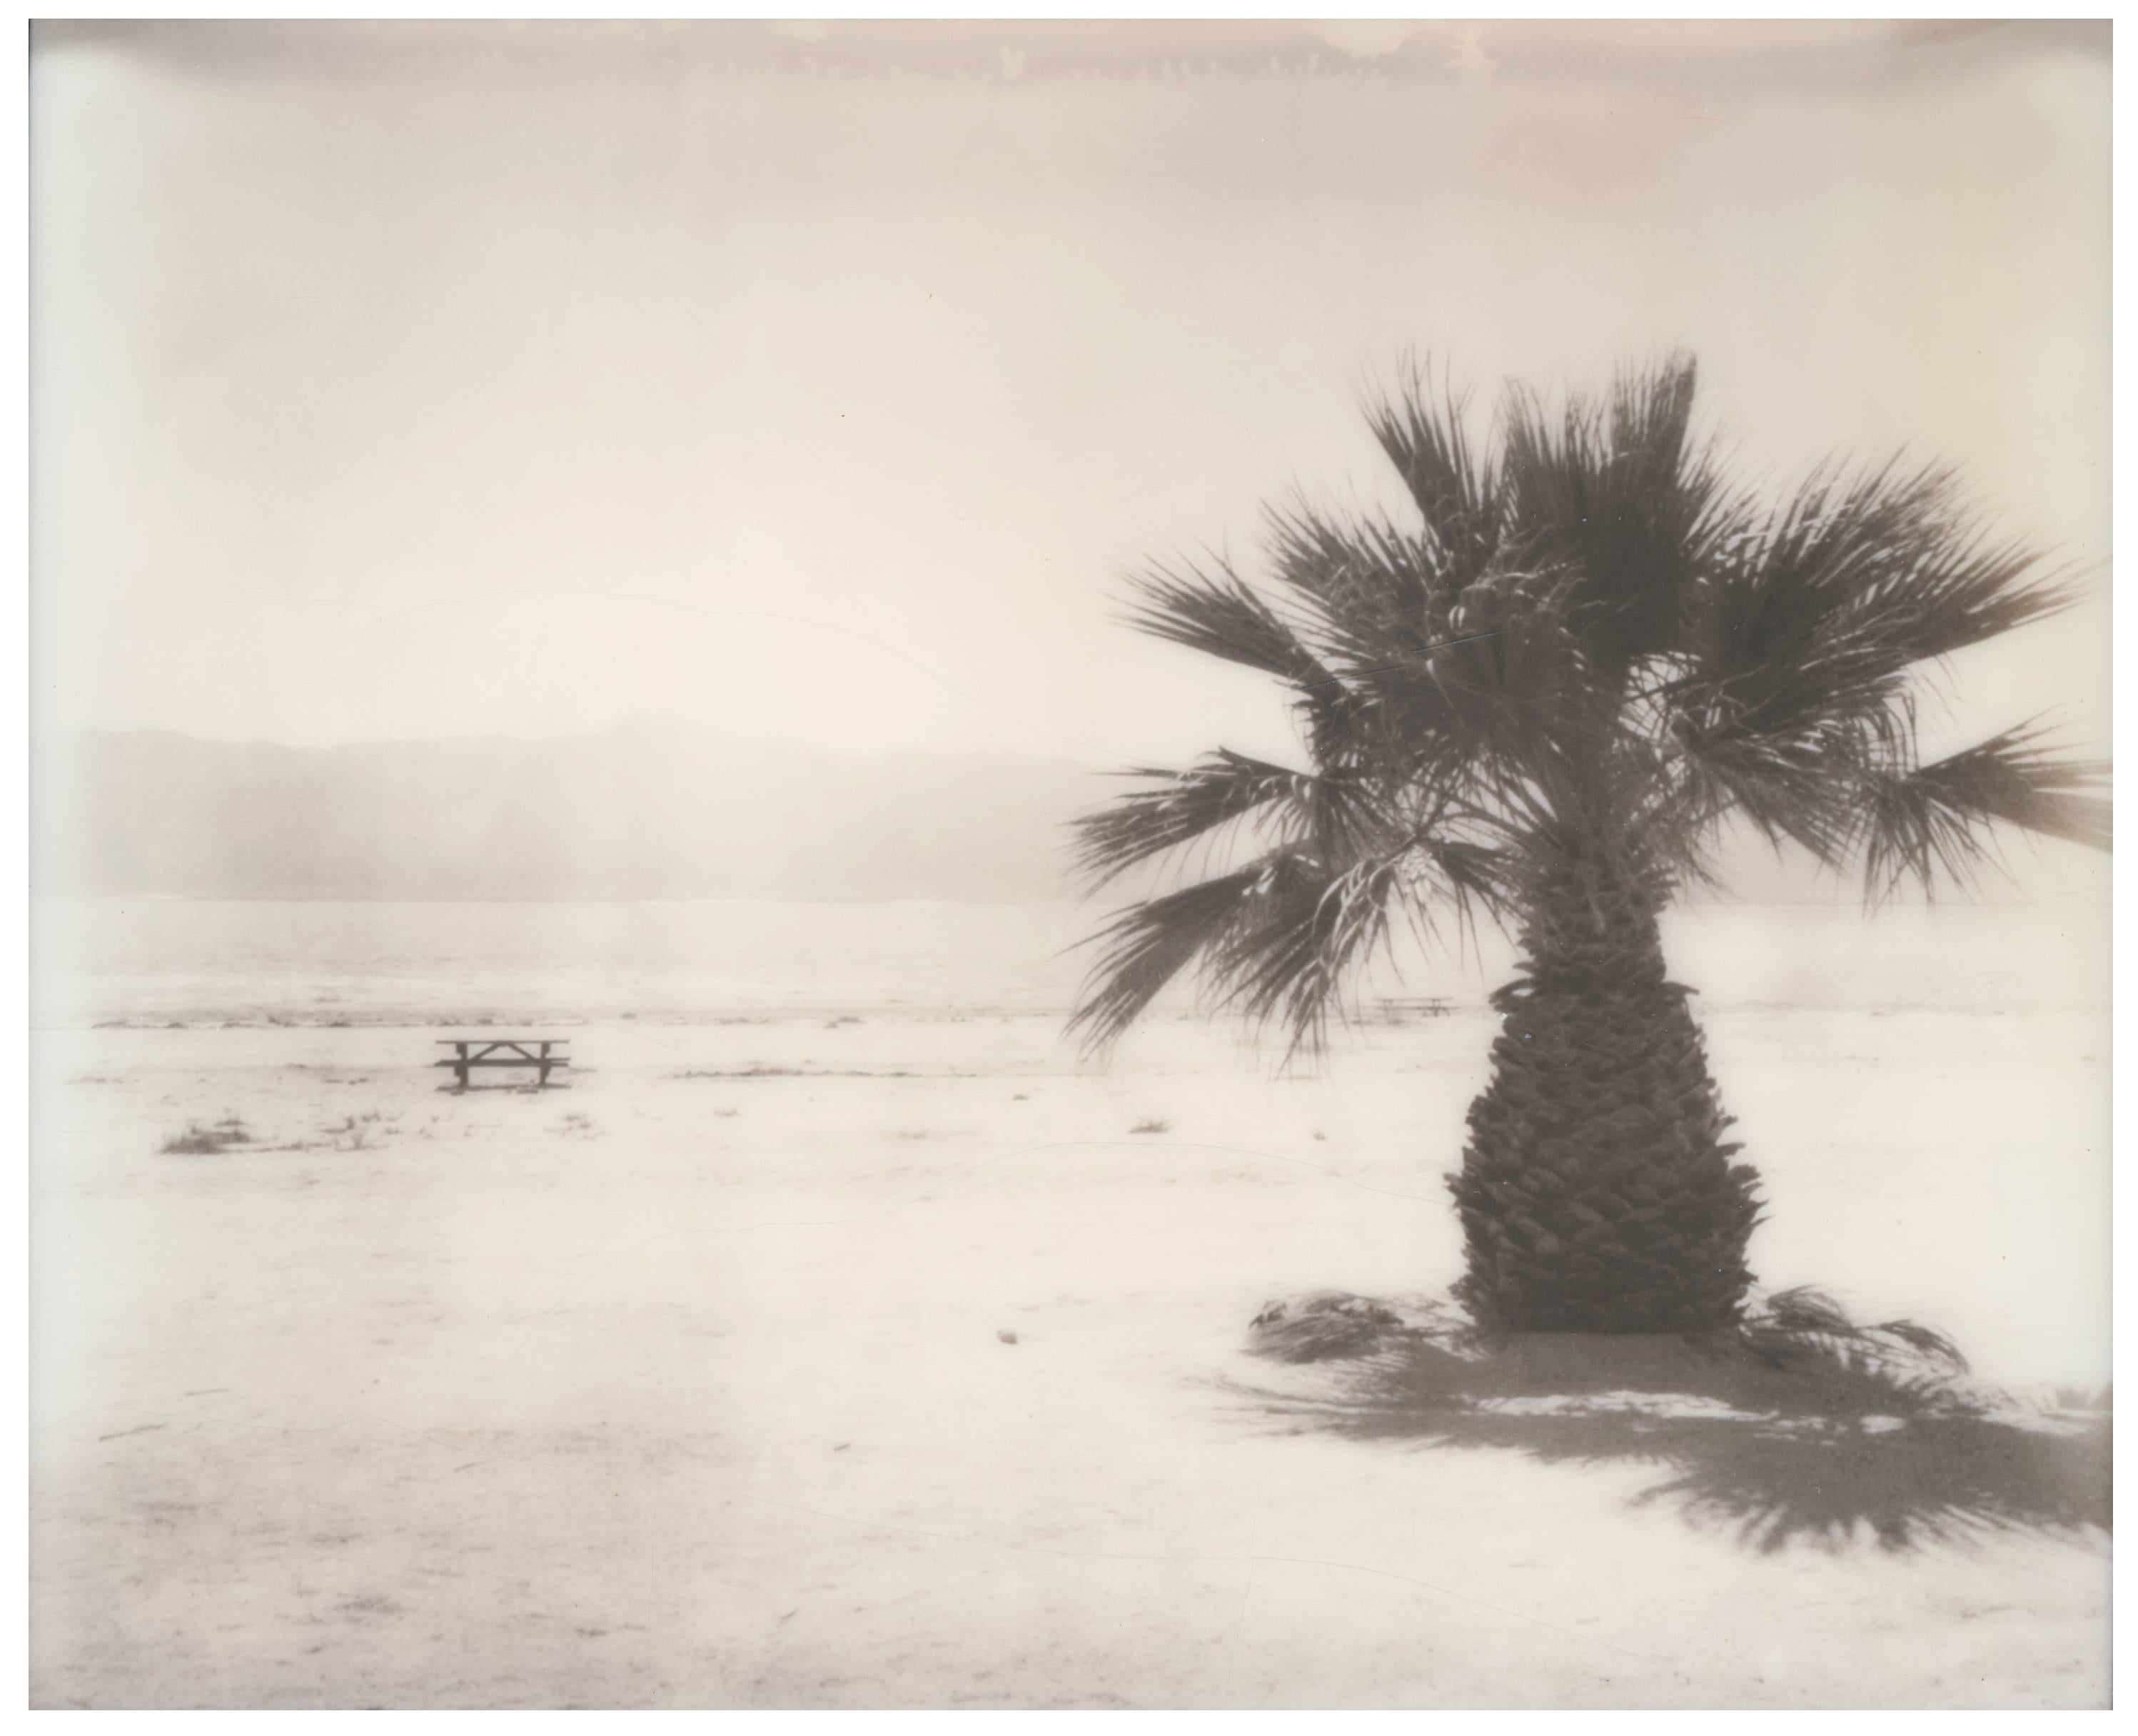 Salton Sea Palm Tree (California Badlands) - Polaroid, Contemporary, Landscape